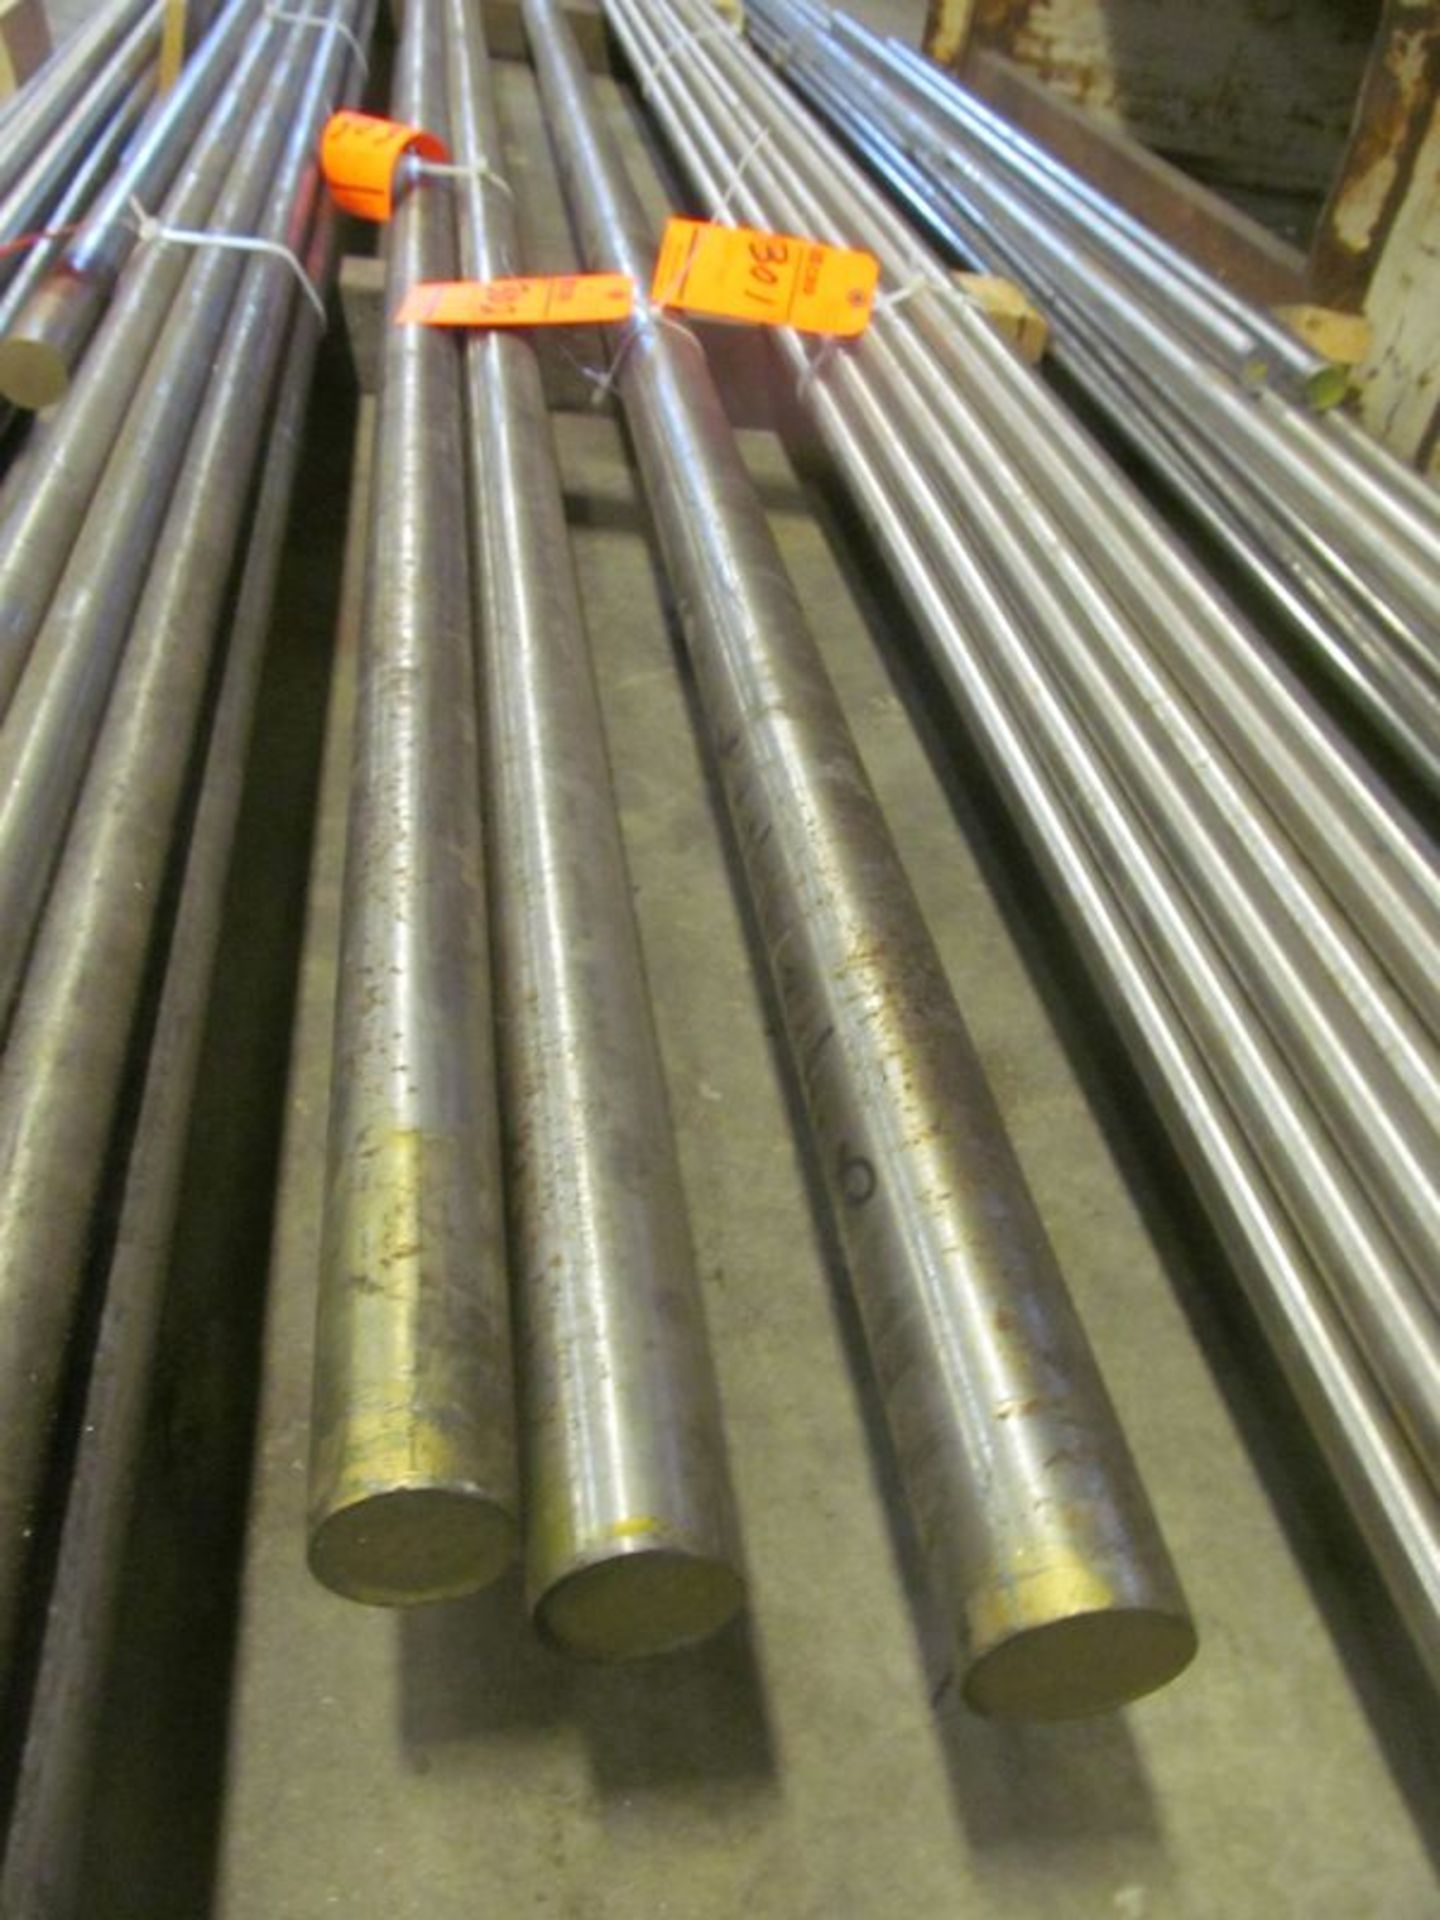 Lot of (2) pieces Stainless Steel grade 17-4, 2" diameter x length (blg 2 rack 8 floor) - Image 2 of 2